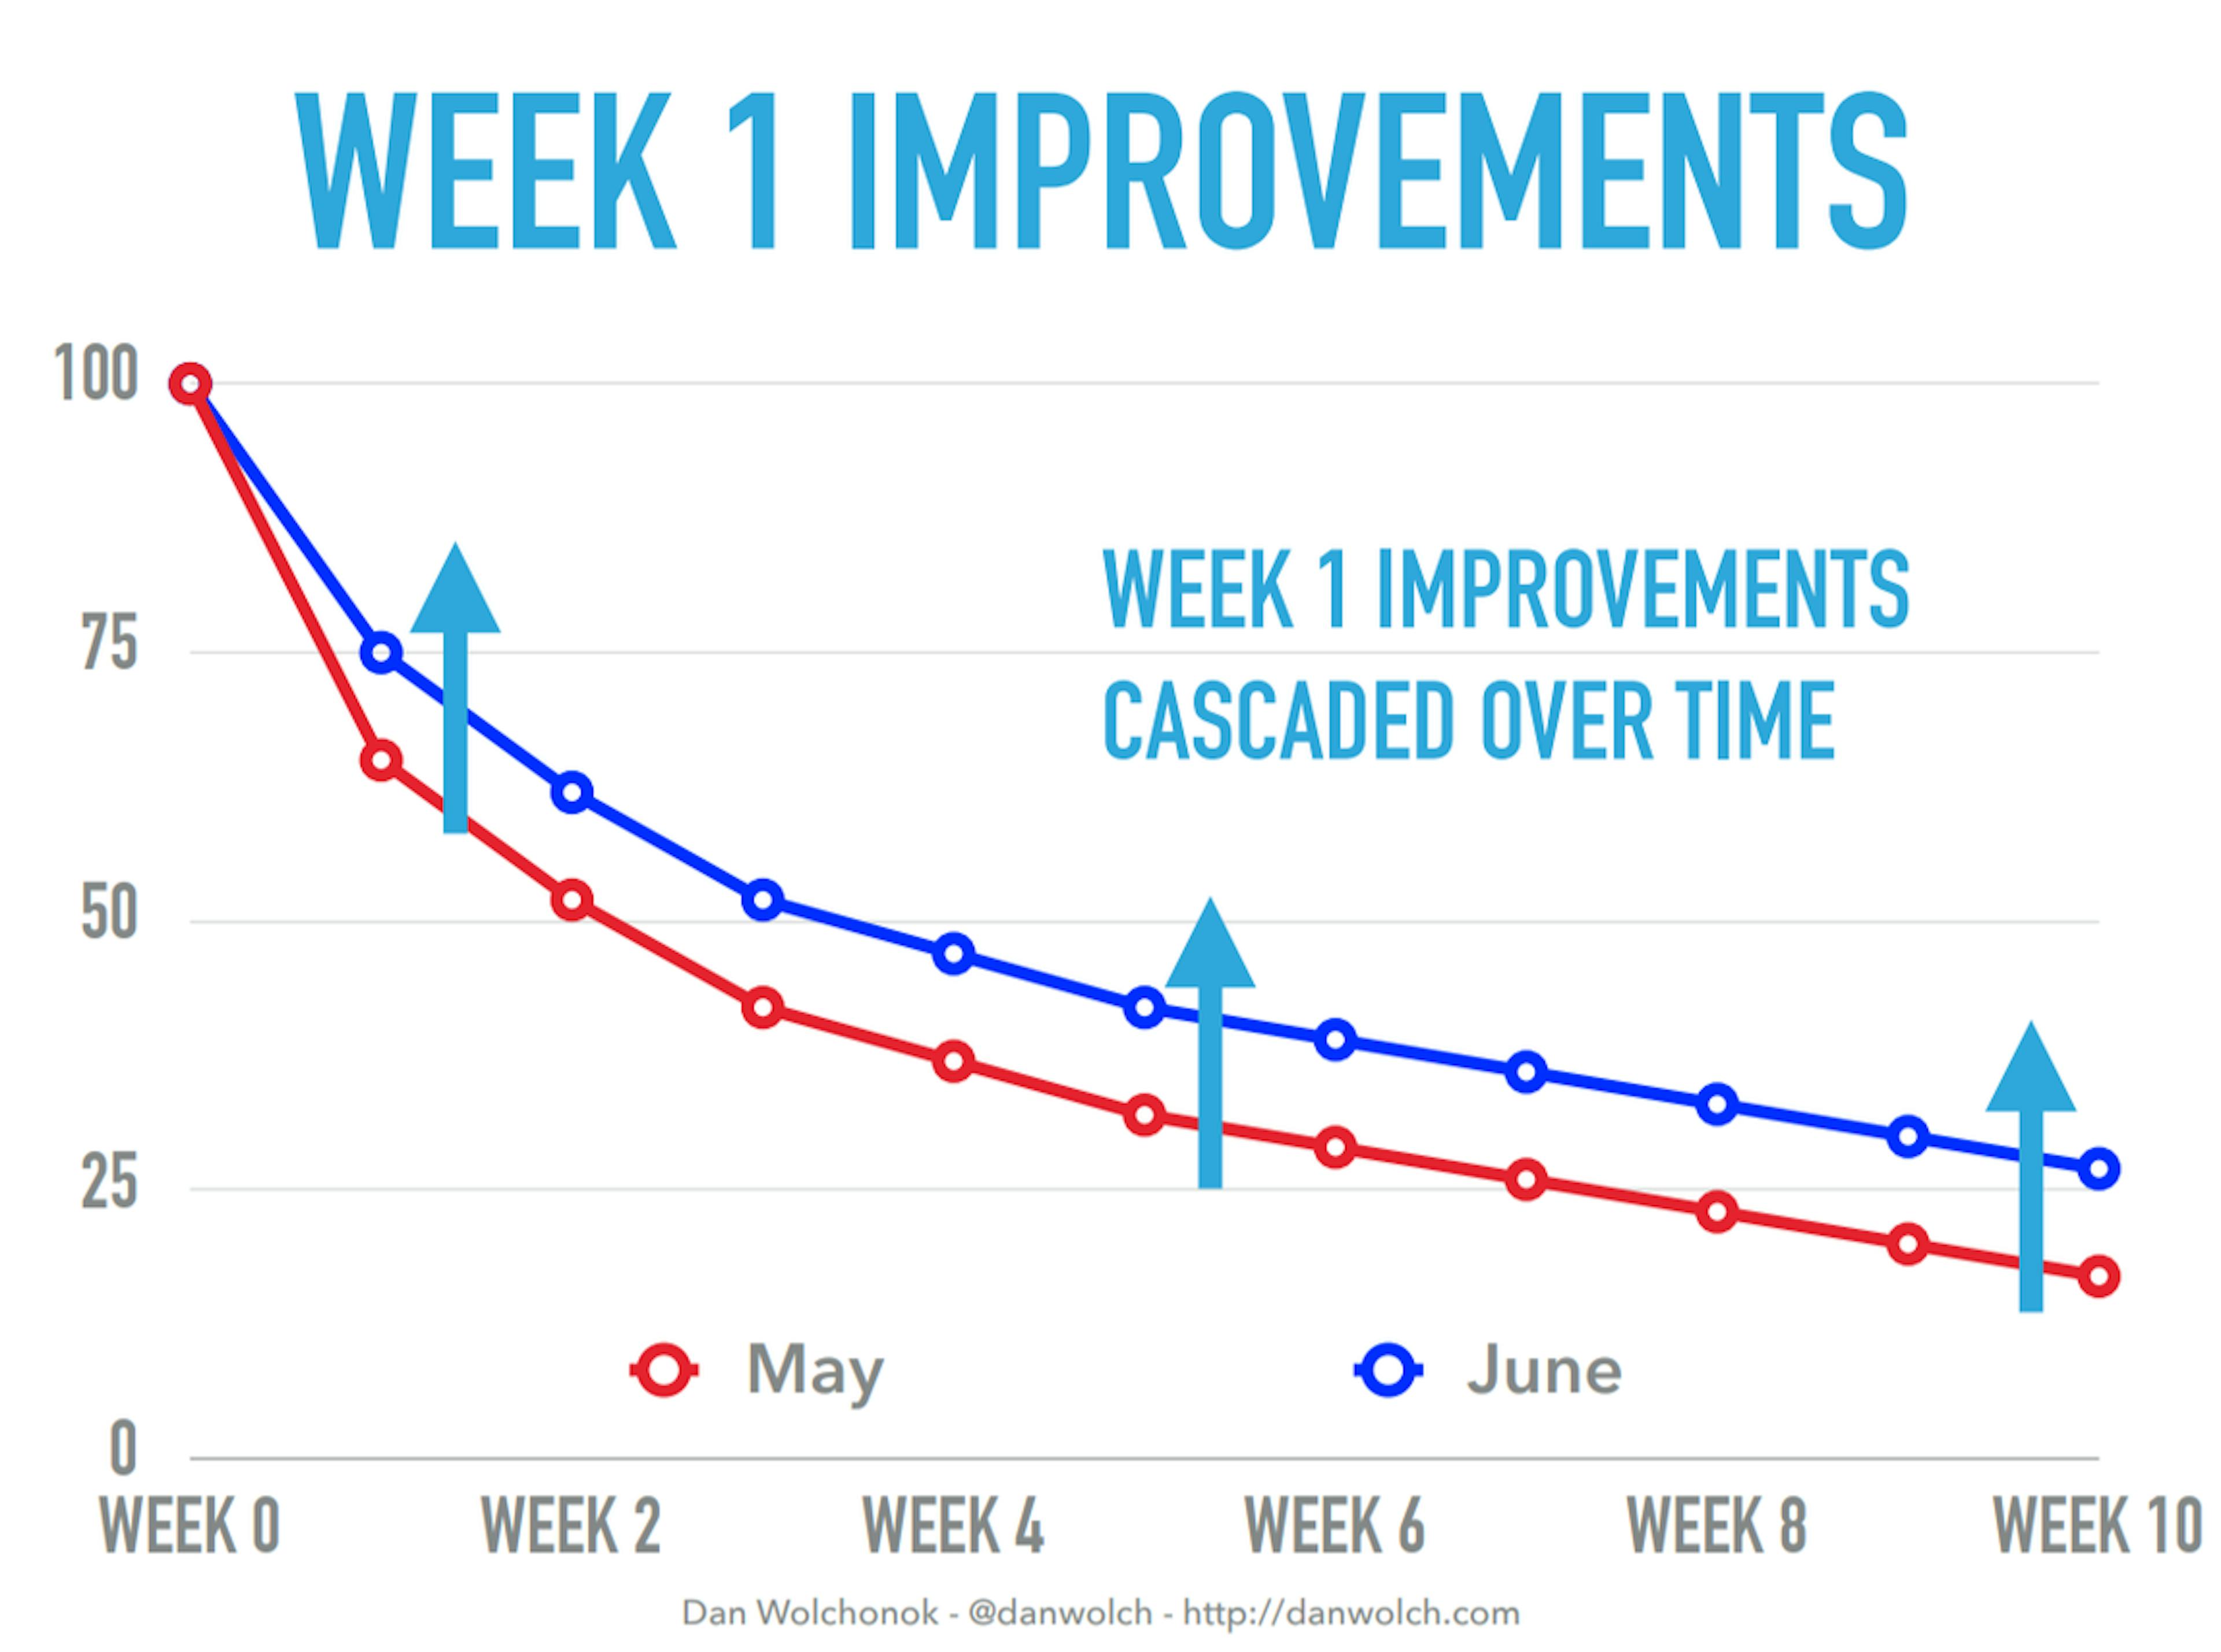 Week 1 retention improvements cascade over time